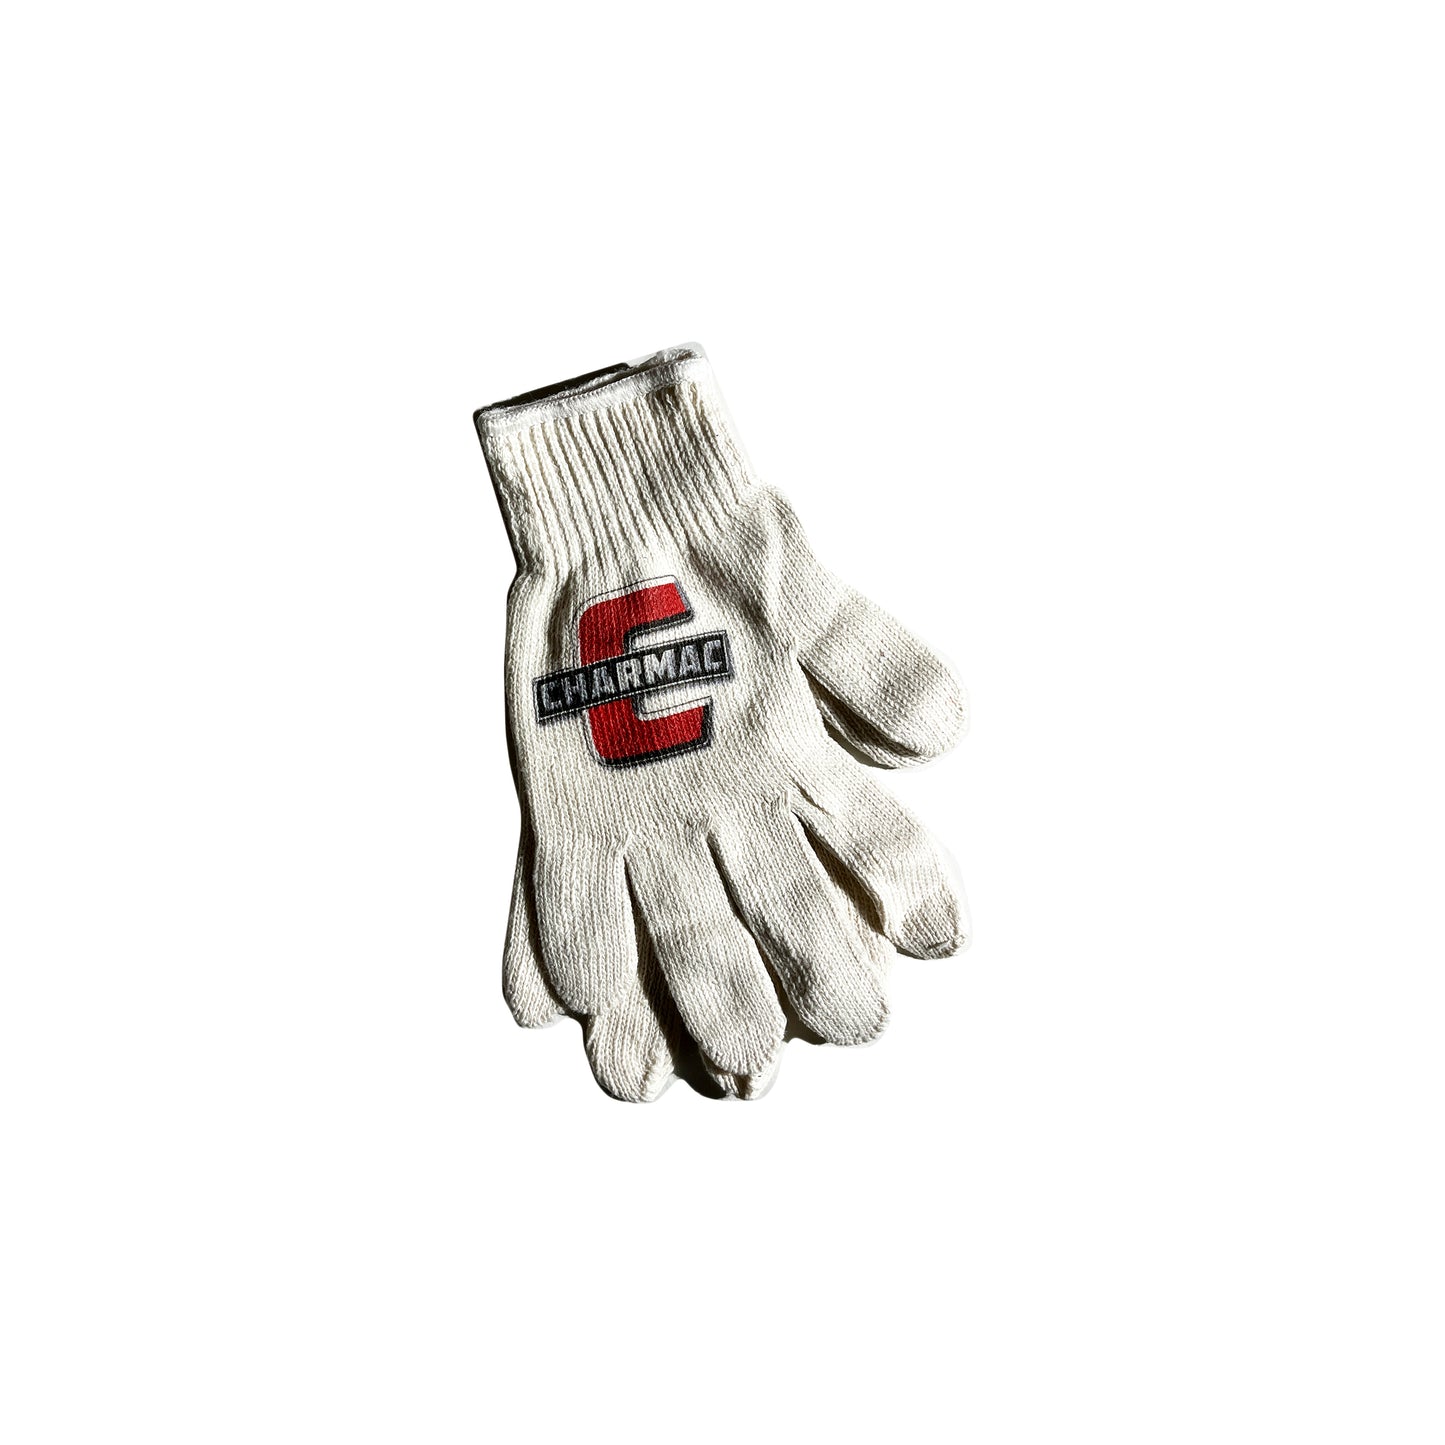 Vintage Construction Gloves Charmac Soft Cotton